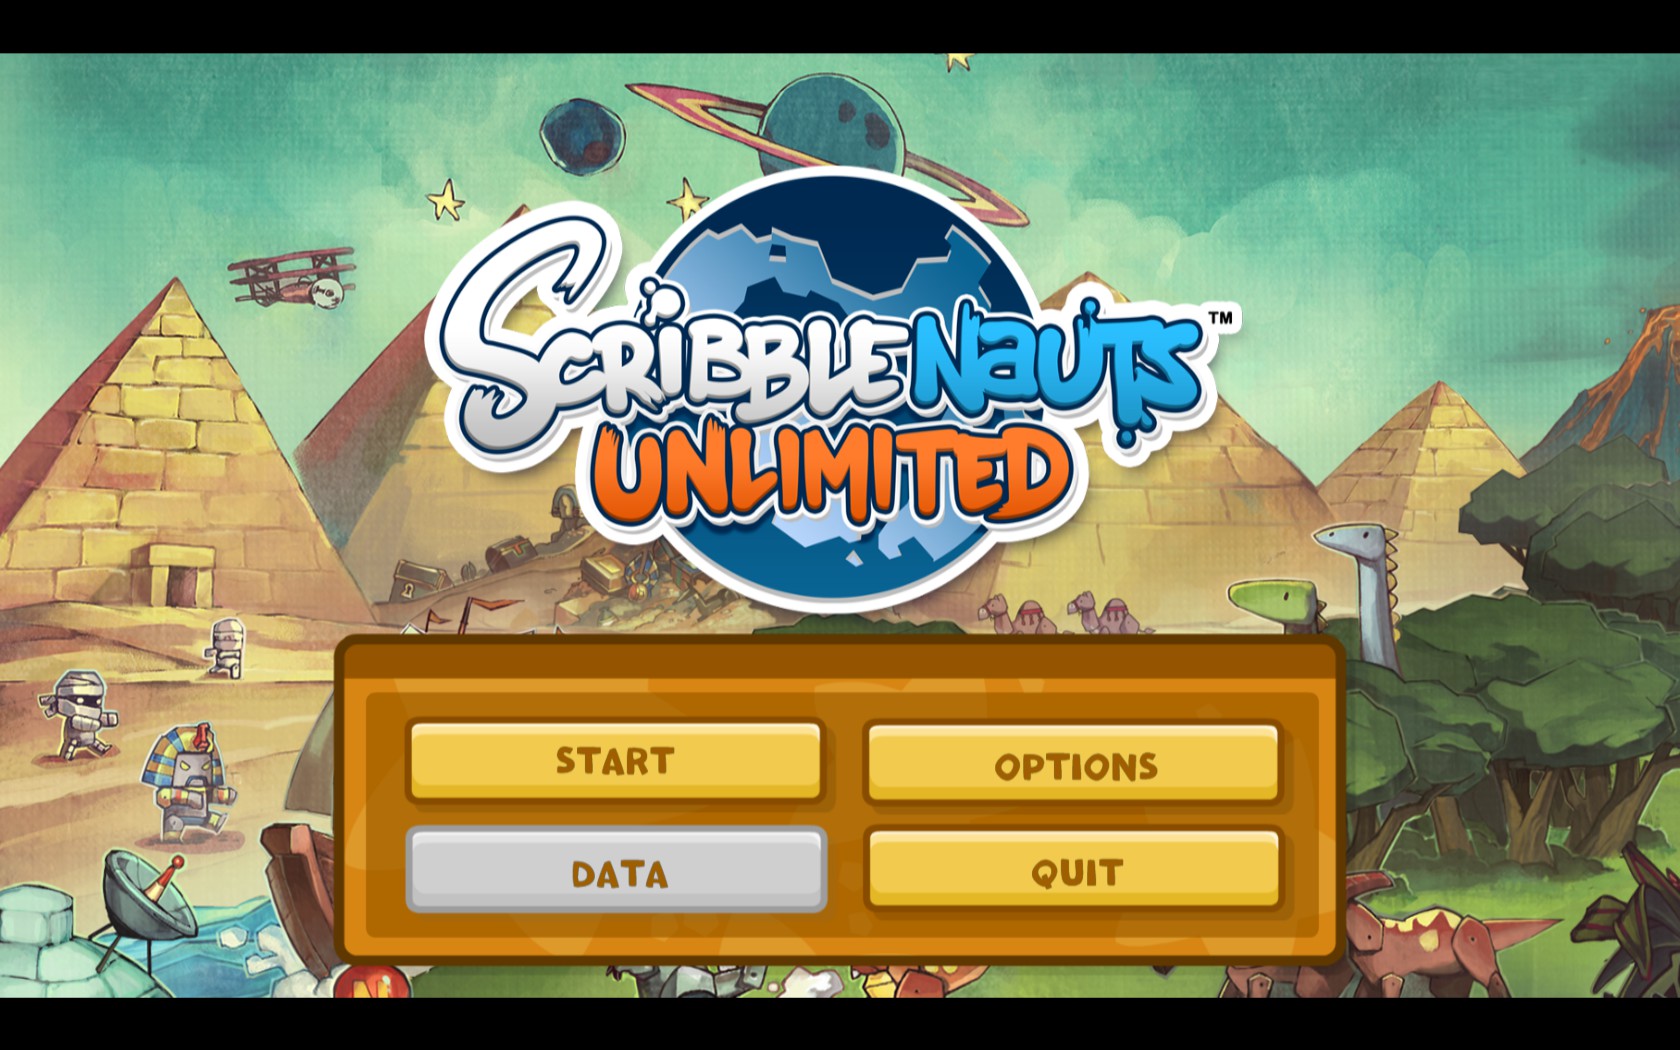 Scribblenauts Unlimited - Nintendo Wii U Game